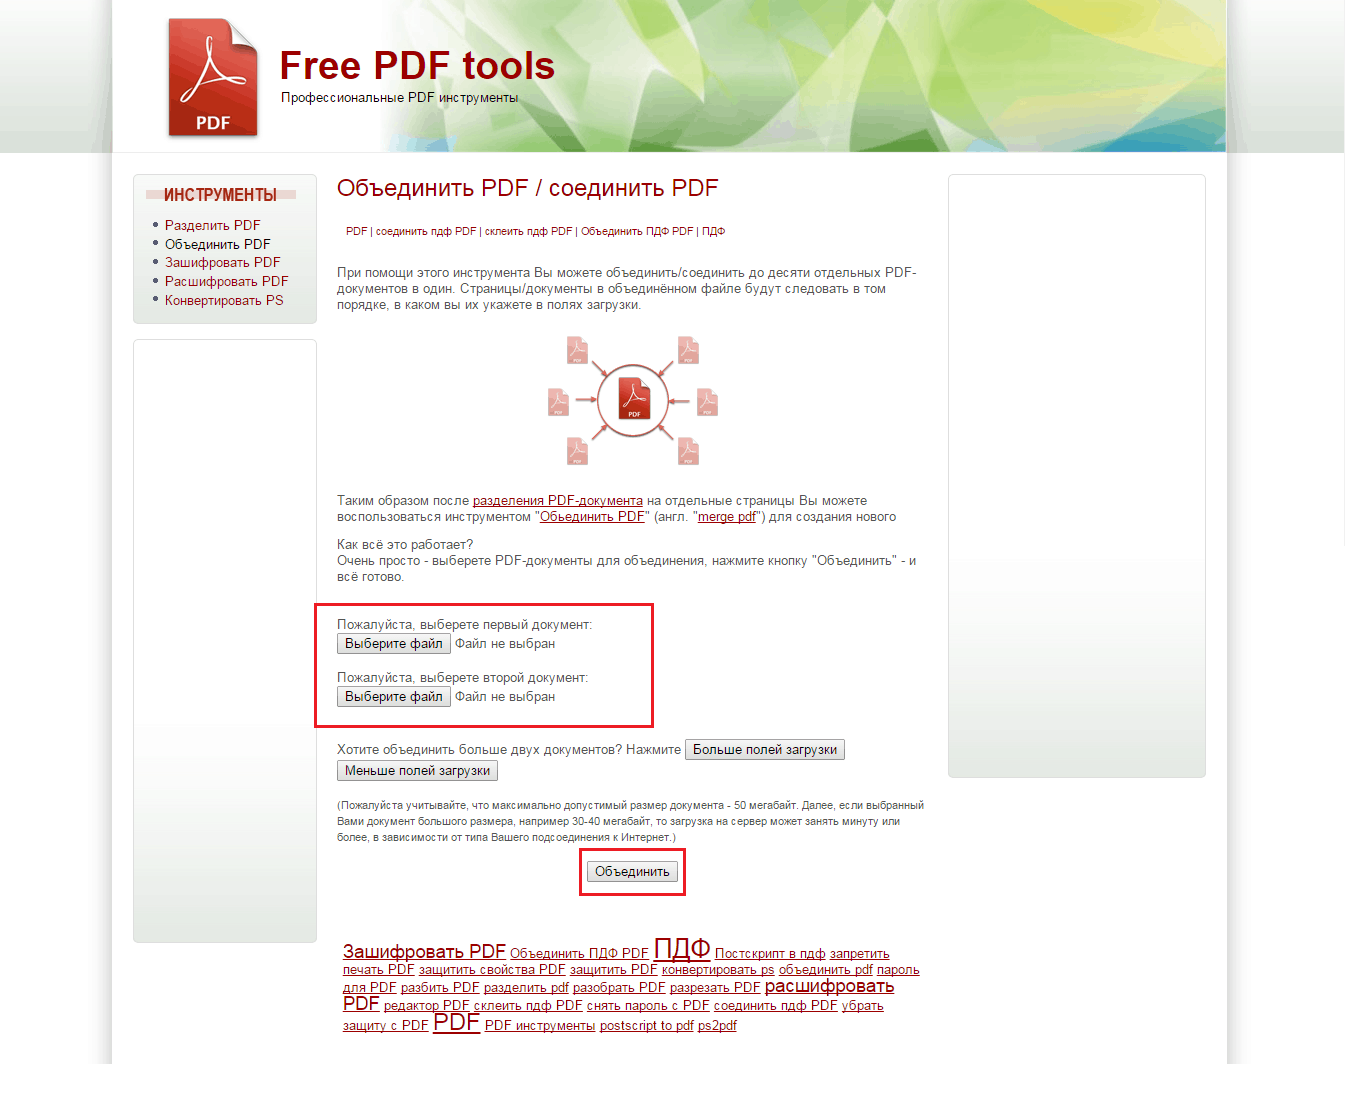 Объединить PDF файлы в один онлайн